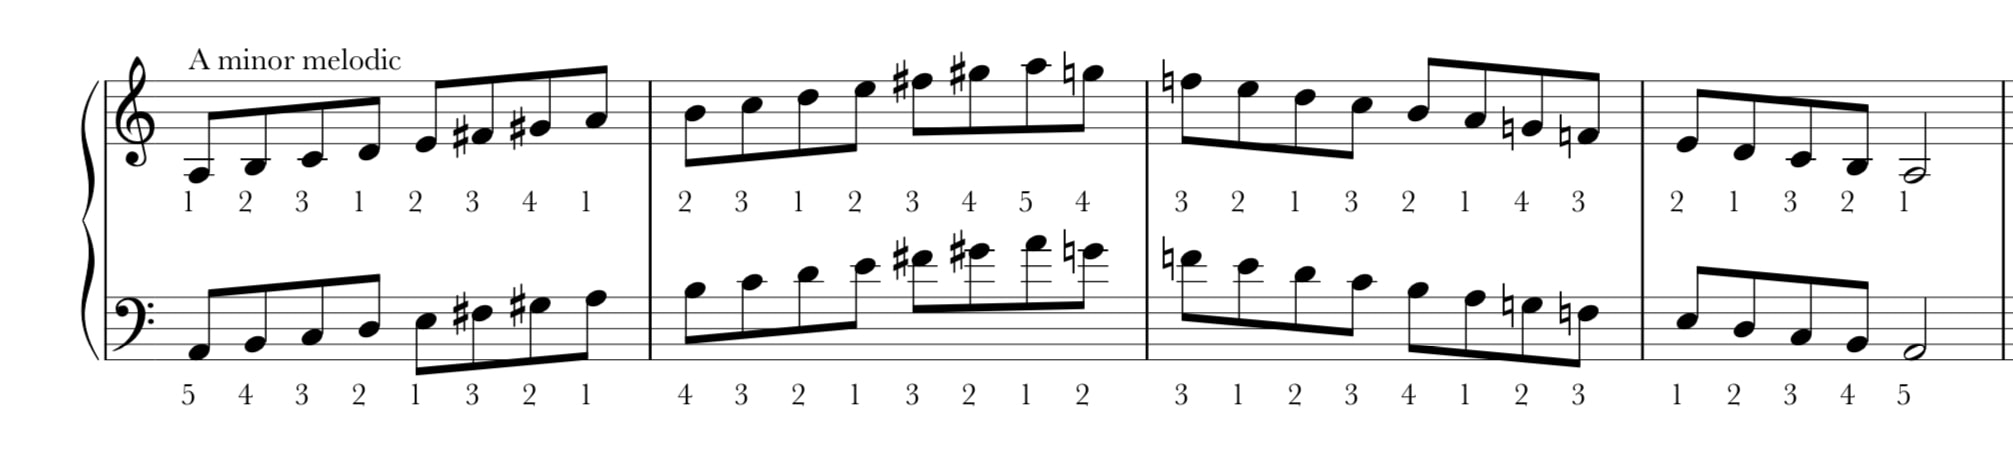 A melodic minor scale